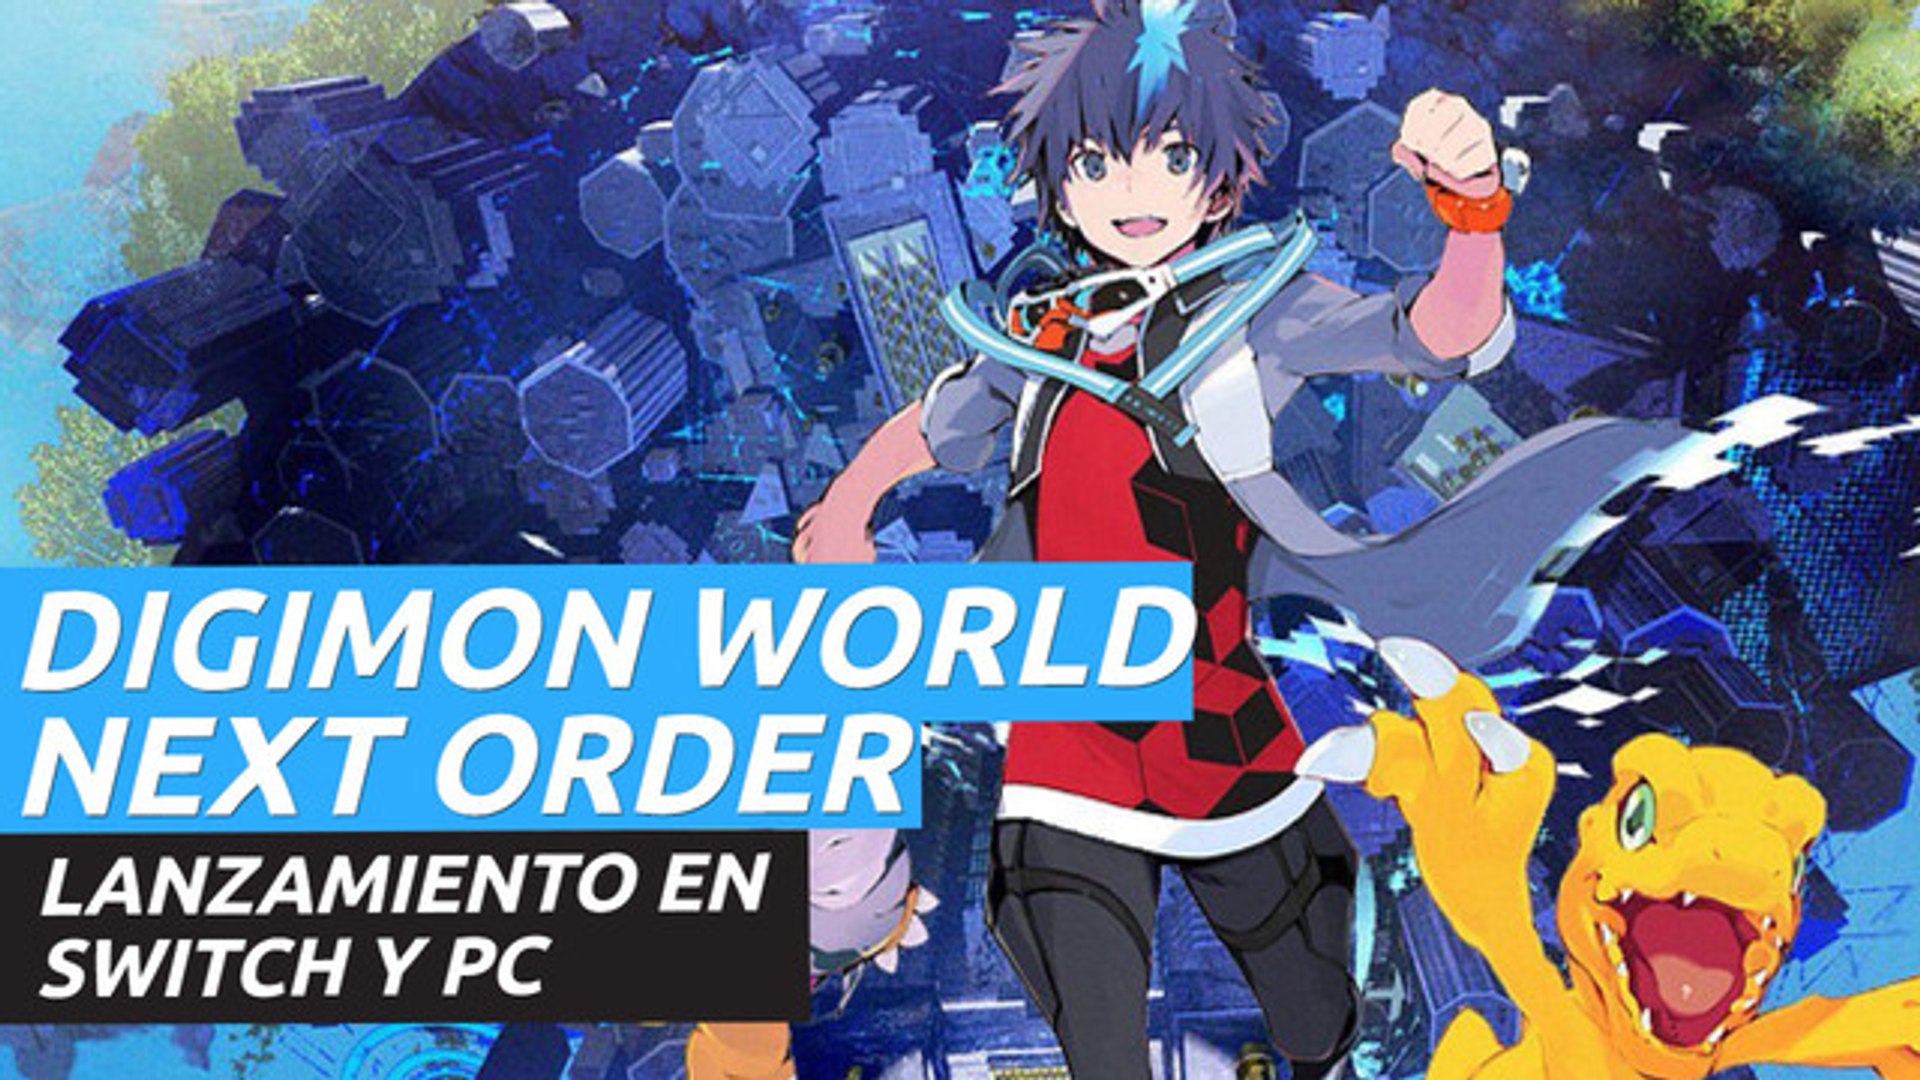 Digimon World: Next Order - Lanzamiento en Switch y PC - Vídeo Dailymotion